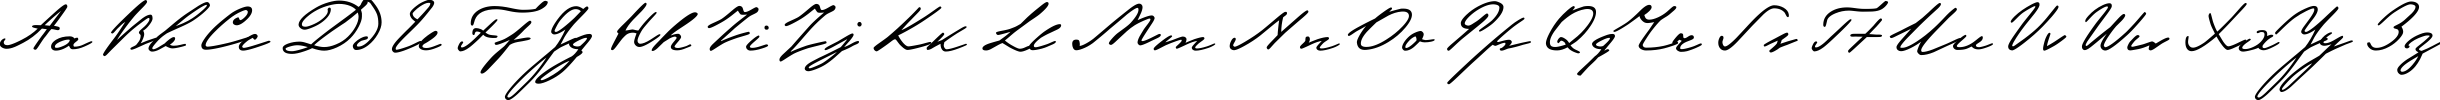 Пример написания английского алфавита шрифтом Pushkin